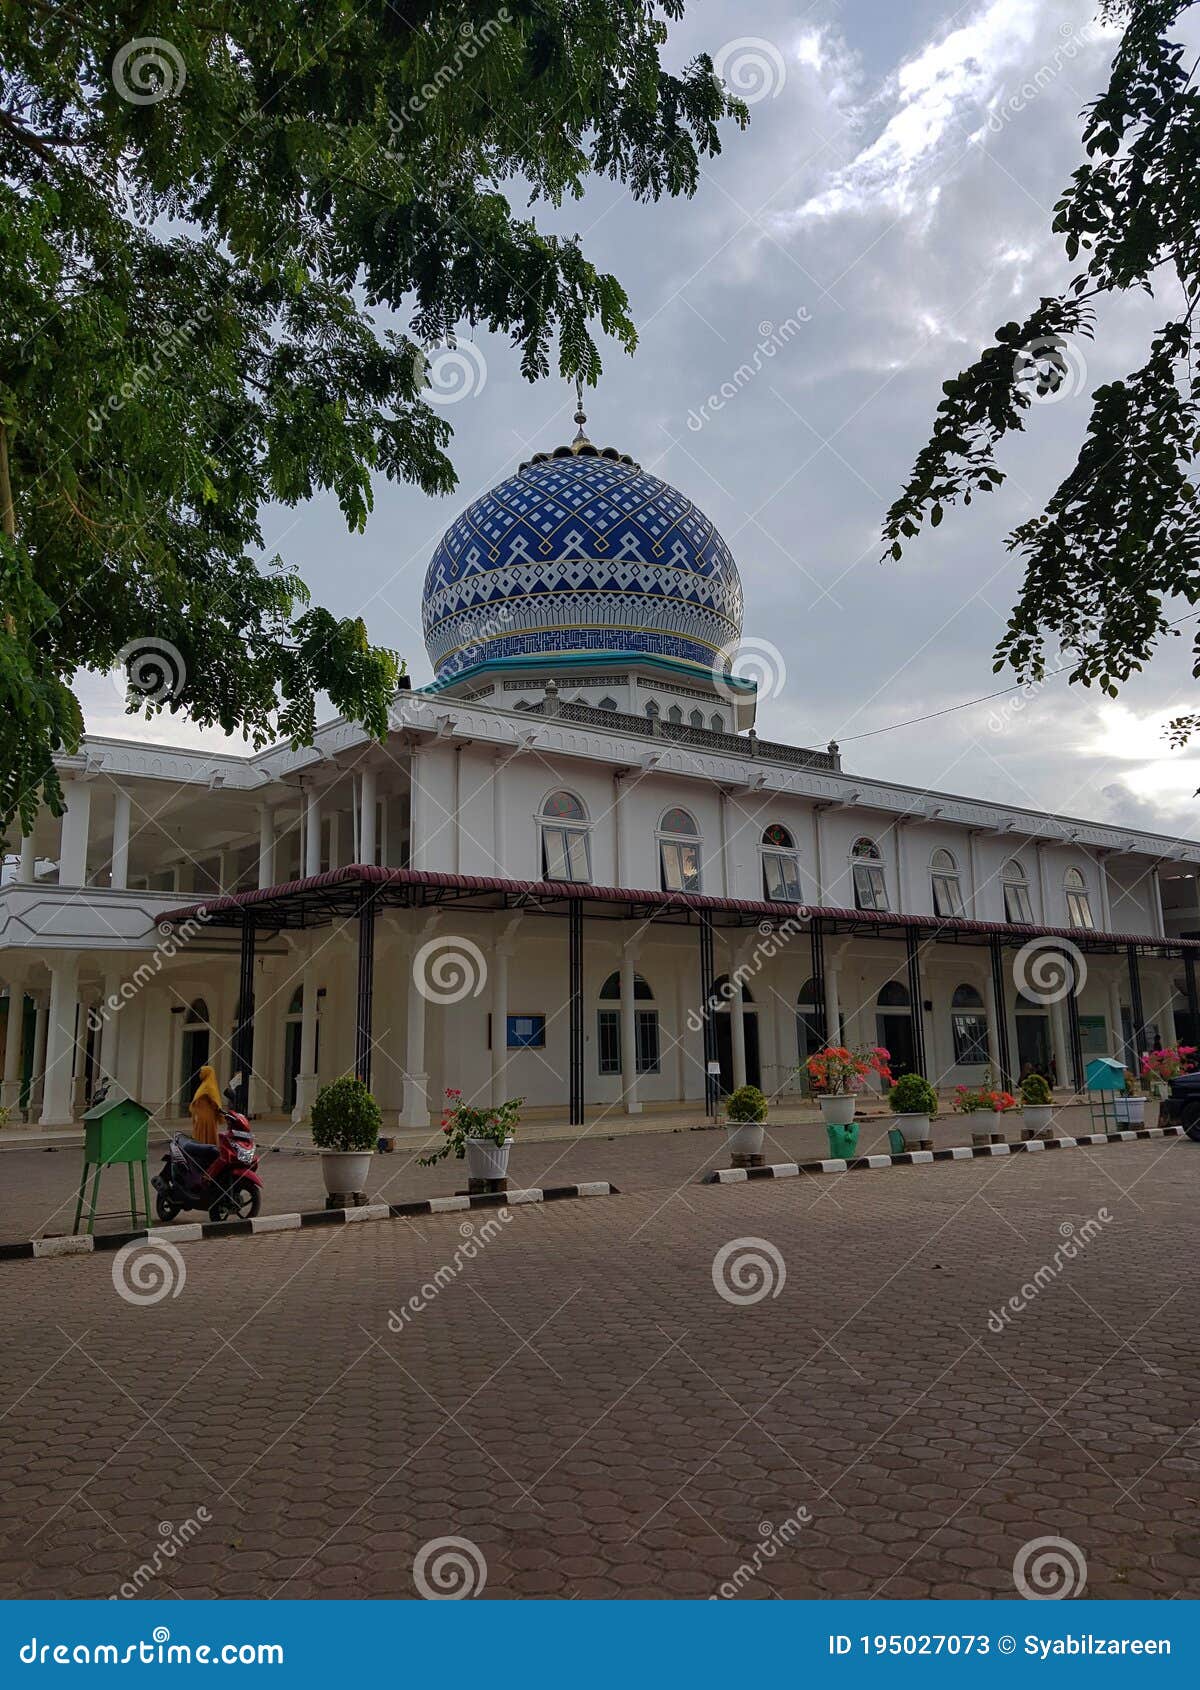 al-faizin mosque with blue qubah in lampeuneurut, aceh besar